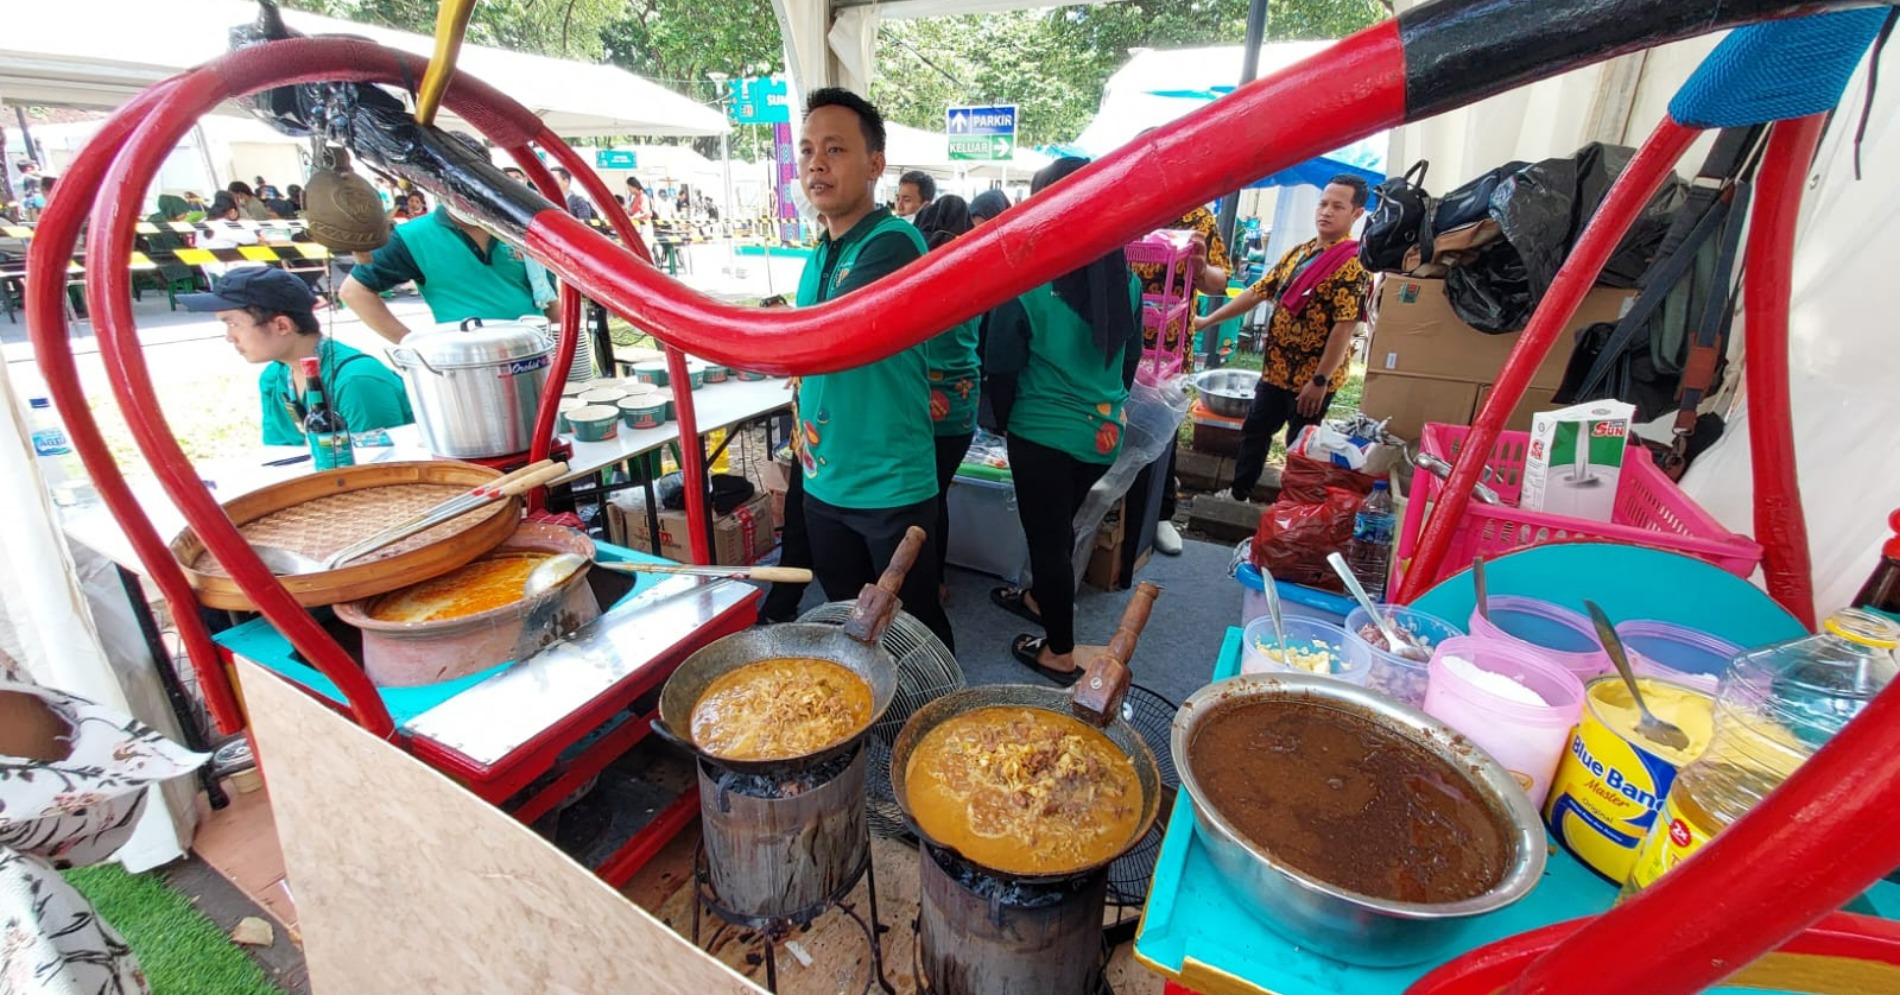 Ragam kuliner di Festival Jajanan Bango 2022 (Sumber gambar: Hypeabis.id/Desynta)